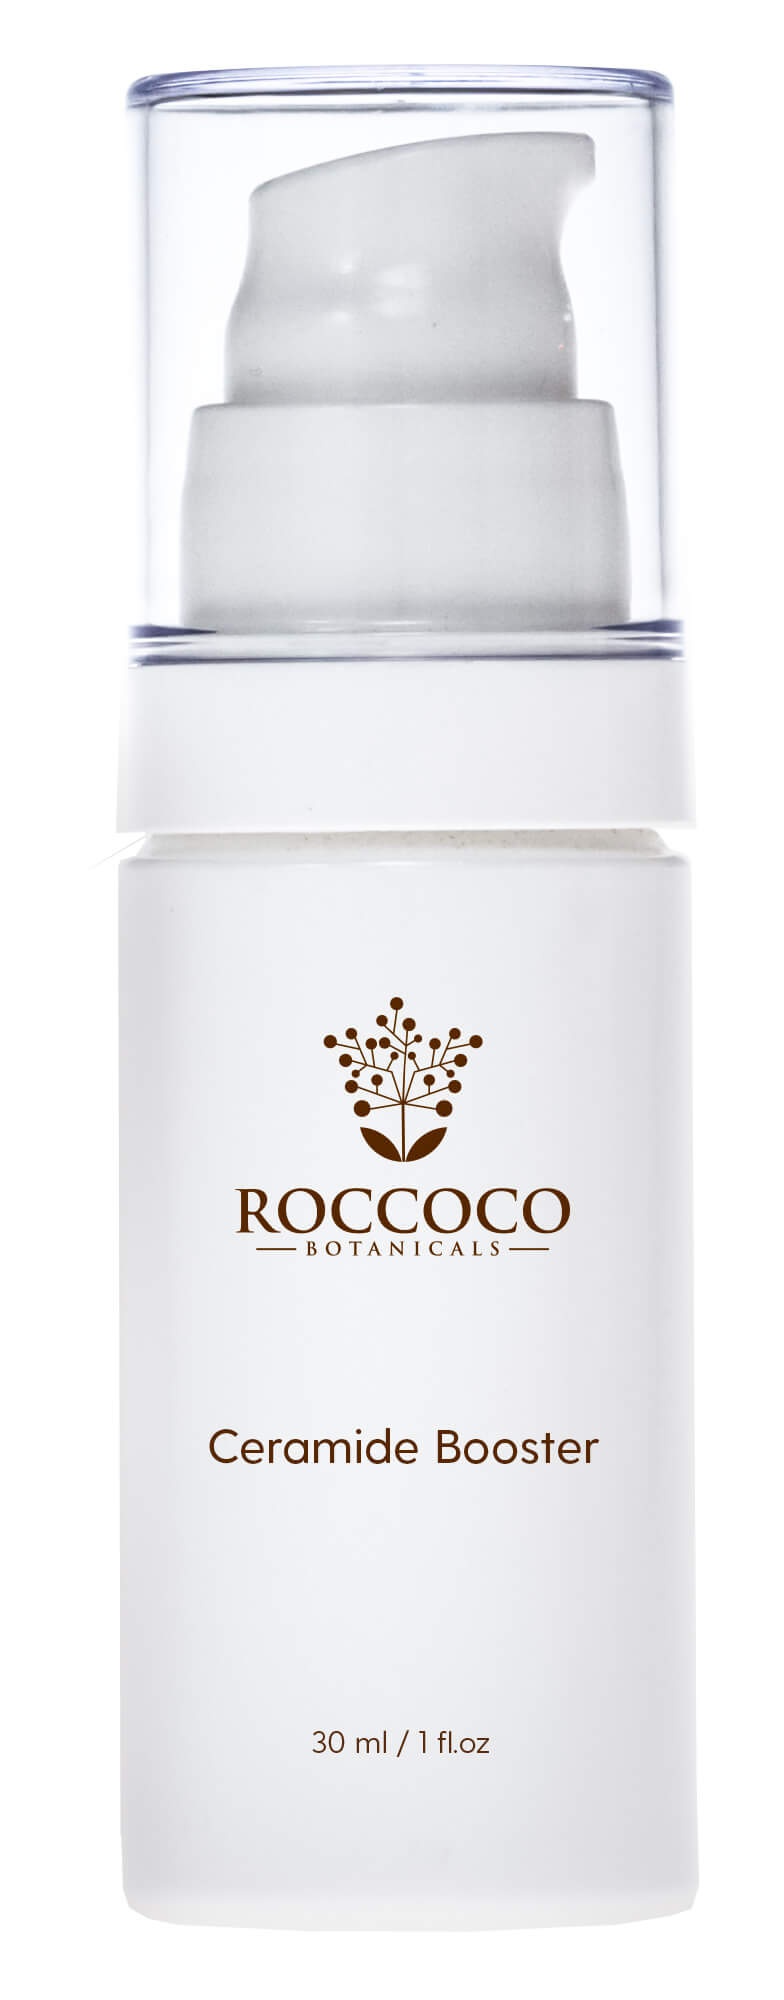 Roccoco Botanicals Ceramide Booster